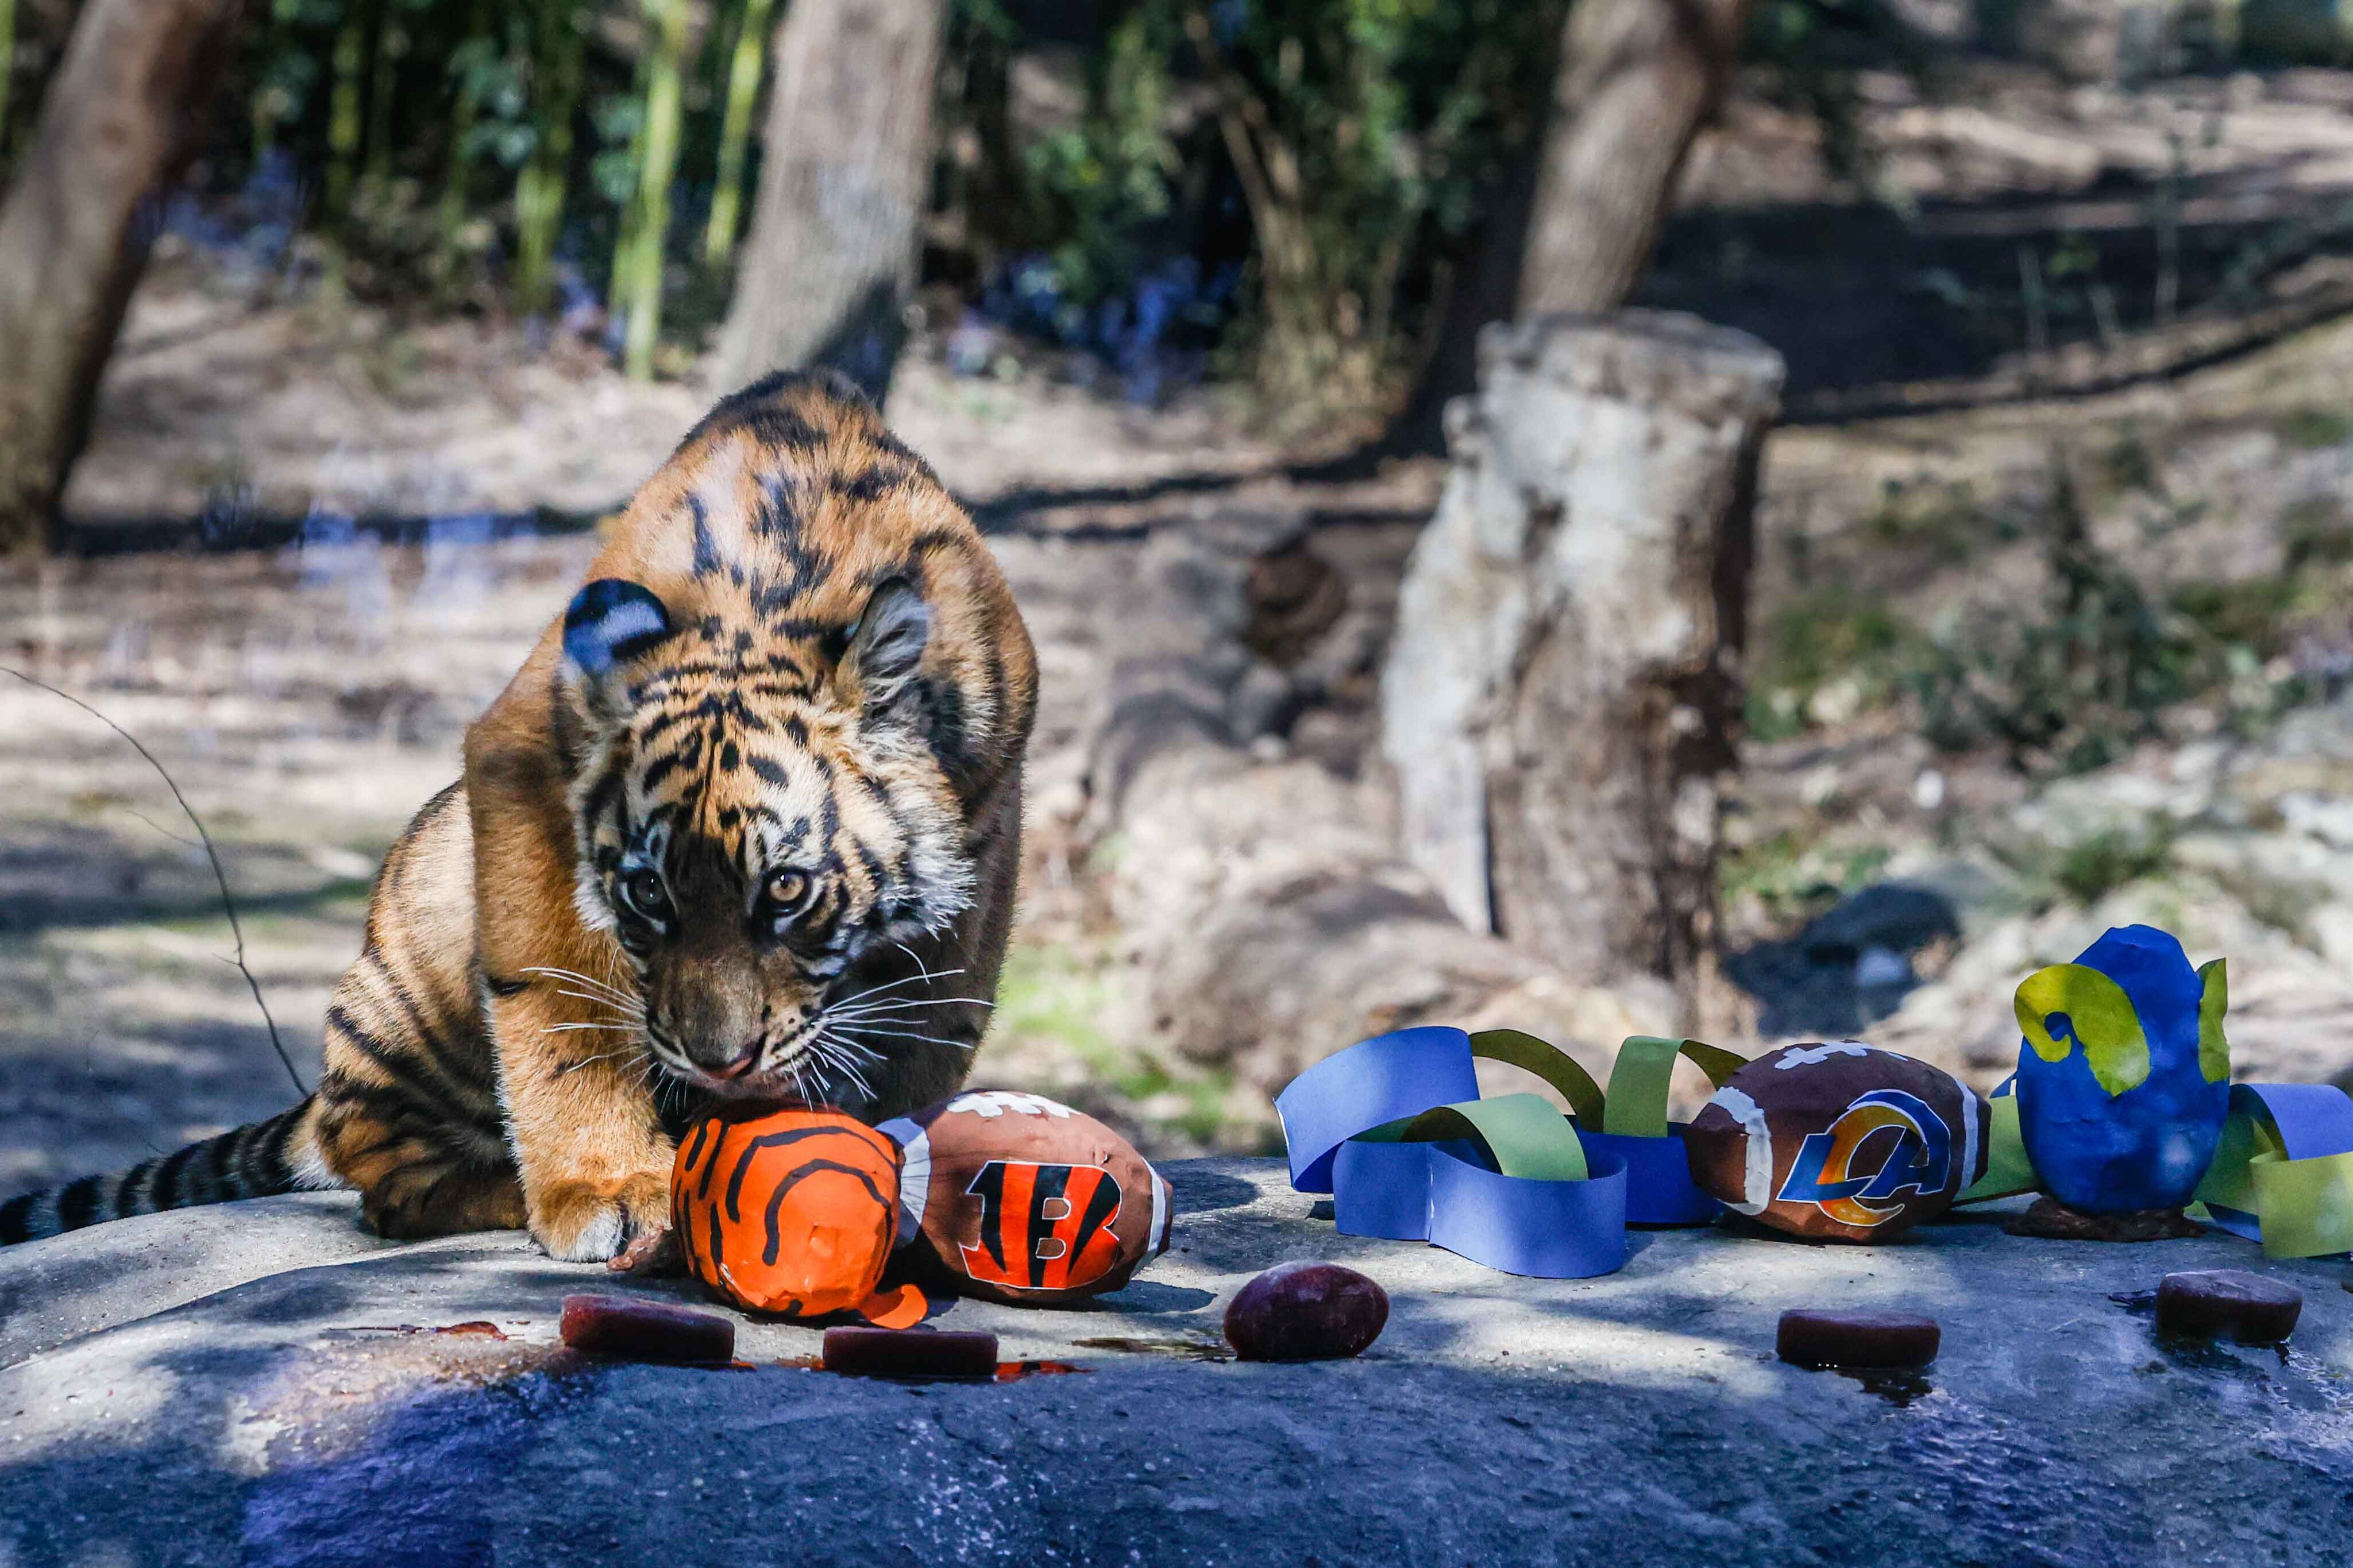 Zoo-per' Bowl: Dallas Zoo's tiger cub predicts Cincinnati Bengals will win  this year's matchup